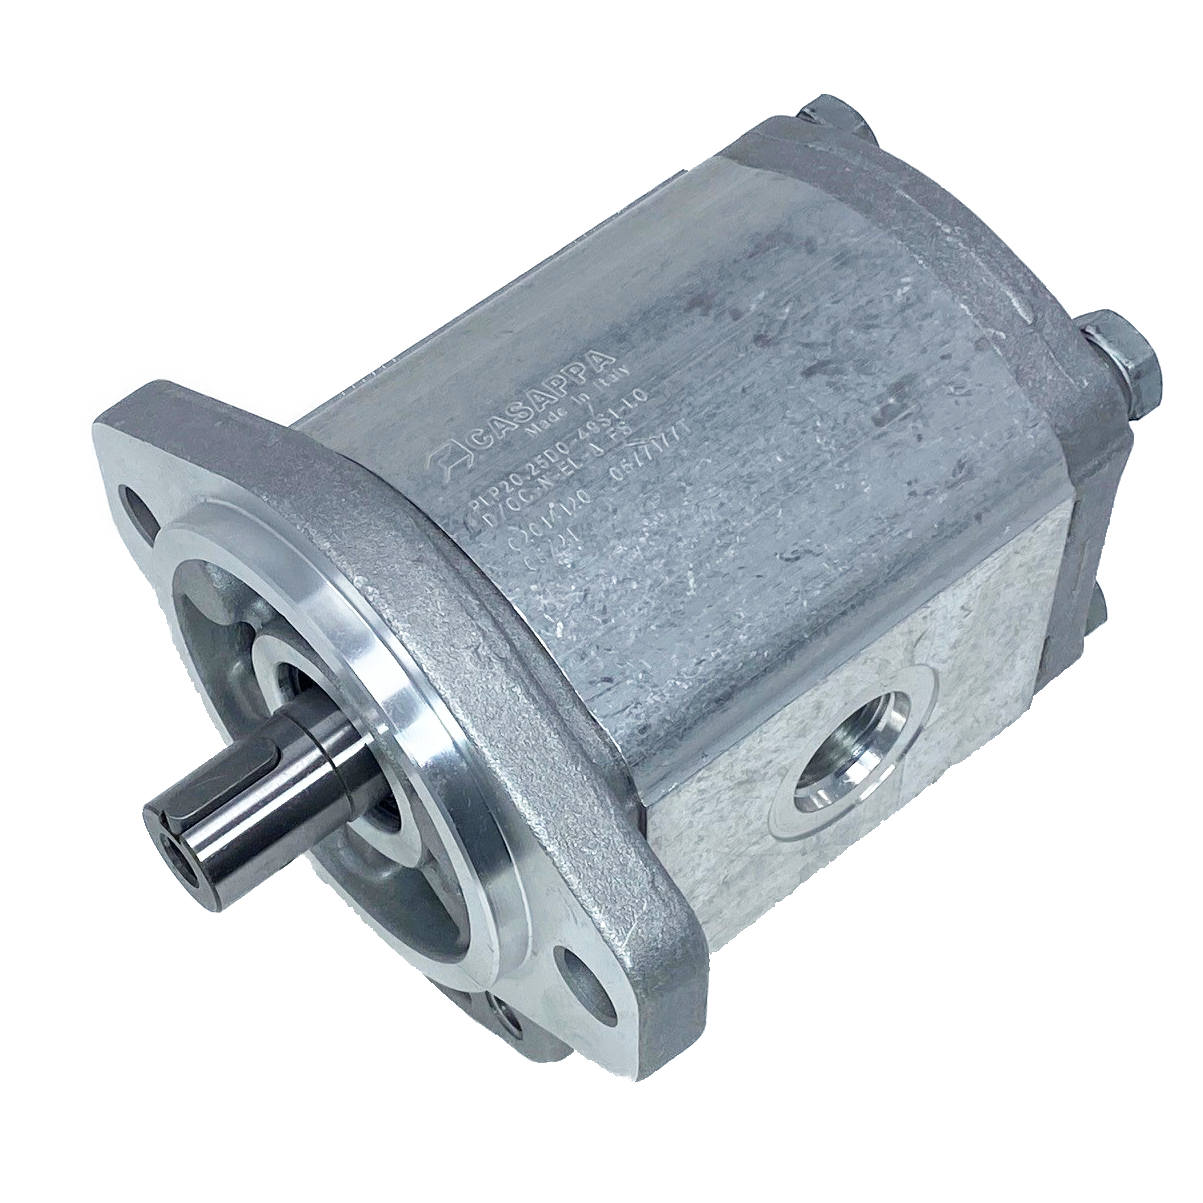 PHP20.25D0-50S9-LOG/OC-N-EL : Casappa Polaris Gear Pump, 26.42cc, 3335psi Rated, 3000RPM, CW, 3/4" Bore x 3/16" Key Shaft, SAE A 2-Bolt Flange, 1.25" #20 SAE Inlet, 0.625 (5/8") #10 SAE Outlet, Cast Iron Body, Aluminum Flange